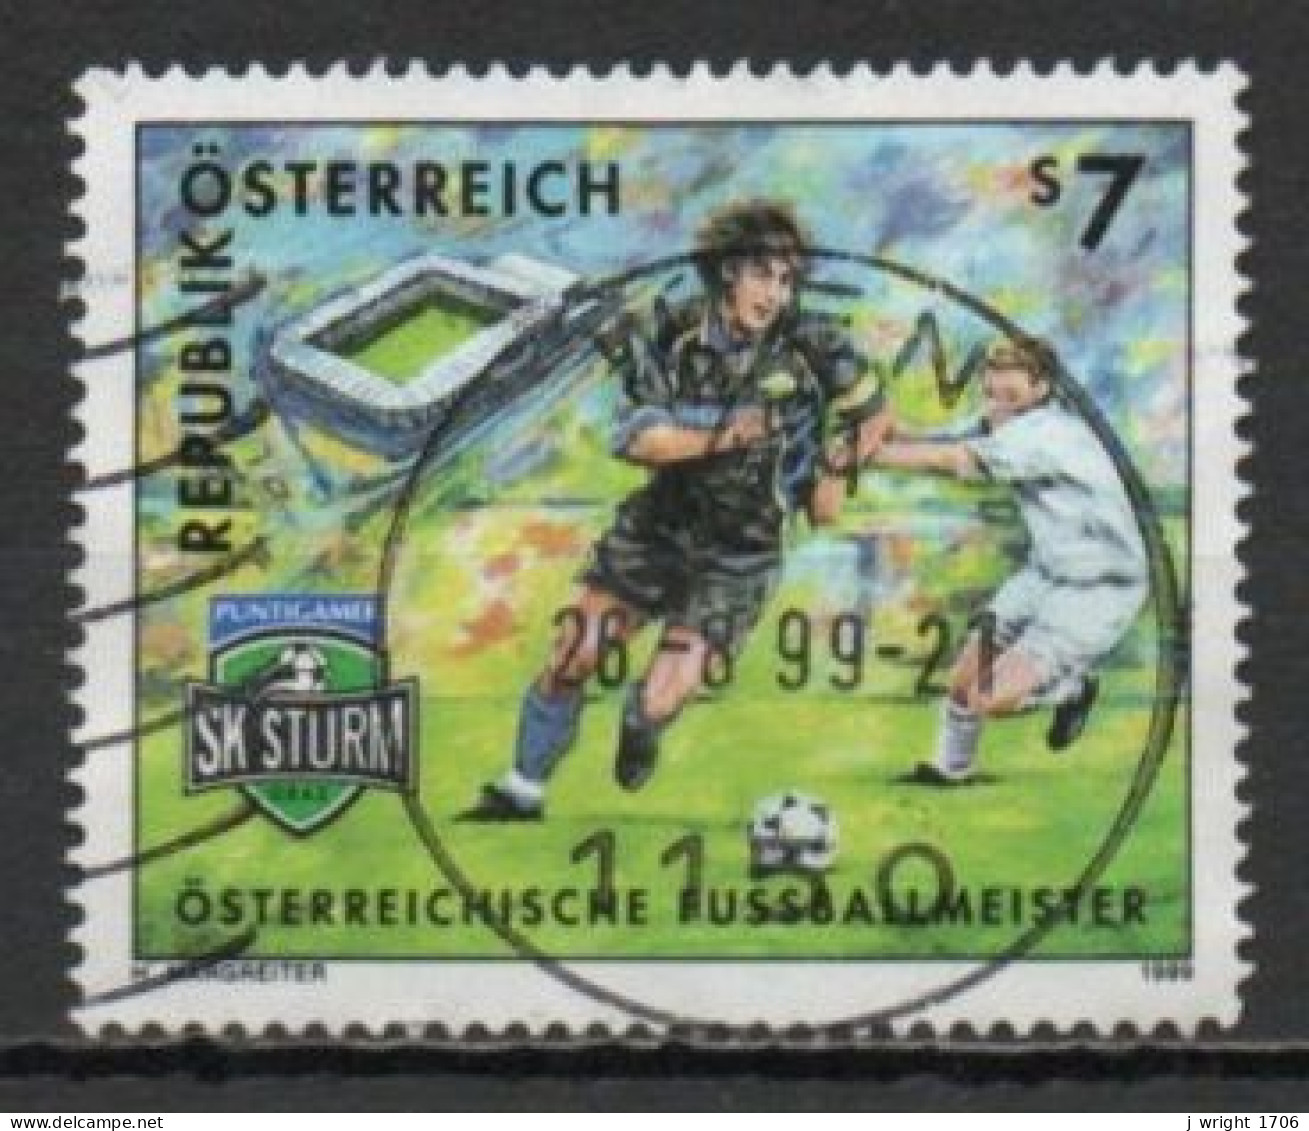 Austria, 1999, SK Puntigamer Sturm Graz Austrian Football Champions, 7s, USED - Gebruikt